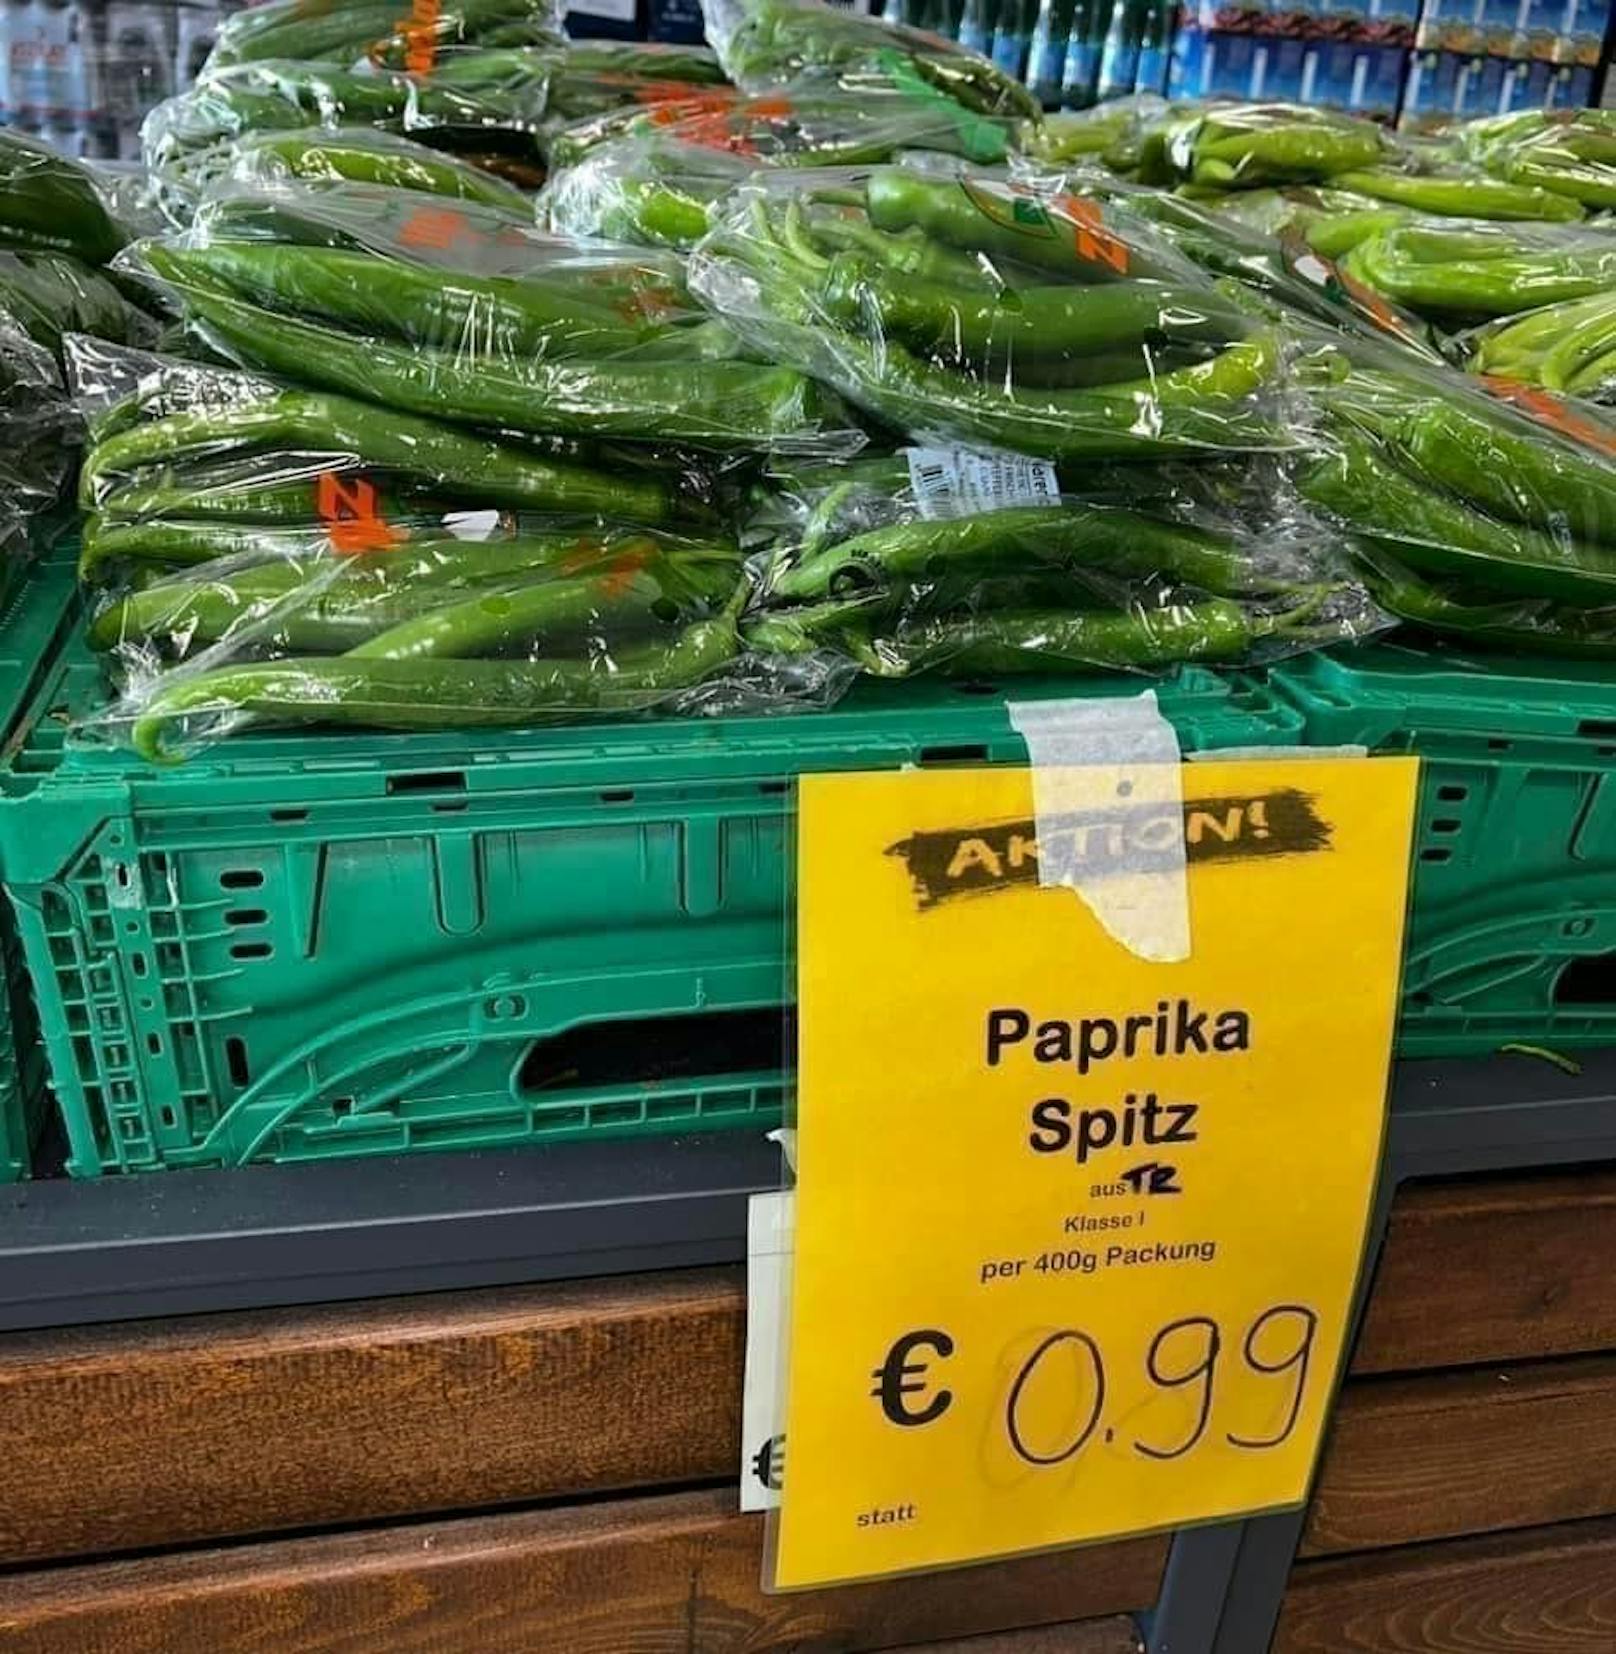 Paprika aus der Türkei um 99 Cent.